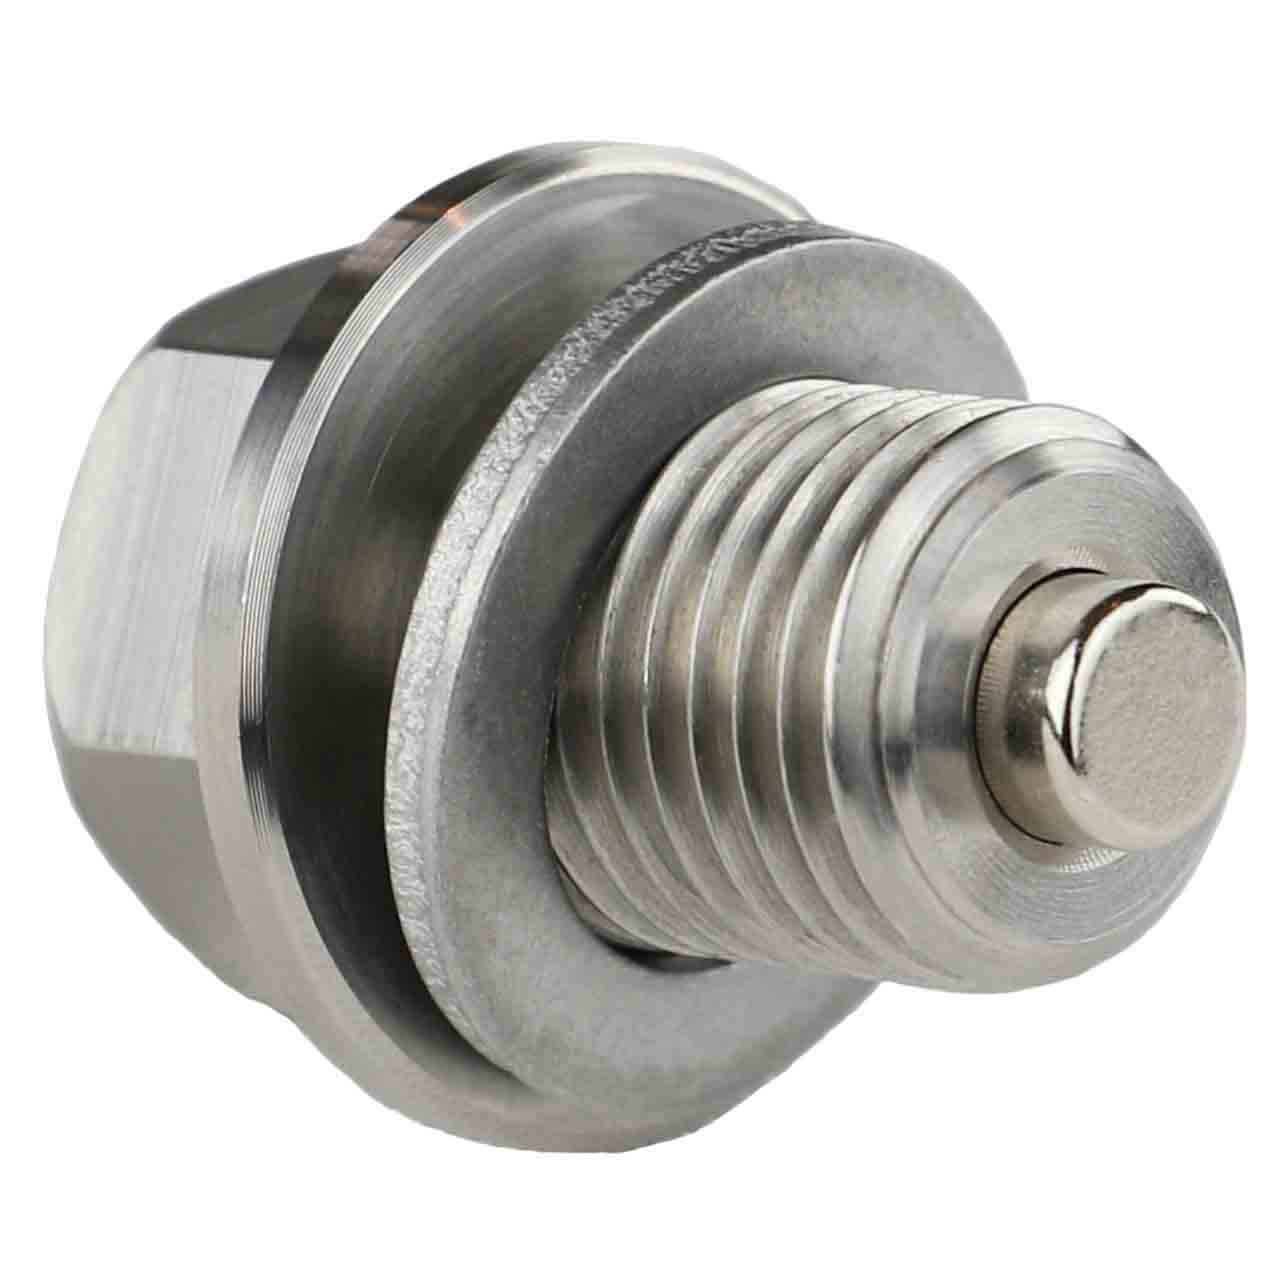 Kia Stinger Magnetic Oil Drain Plug - 2022-2023 - 2.5 Liter - 4 Cylinder - Made In USA - Part Number 21512-23001